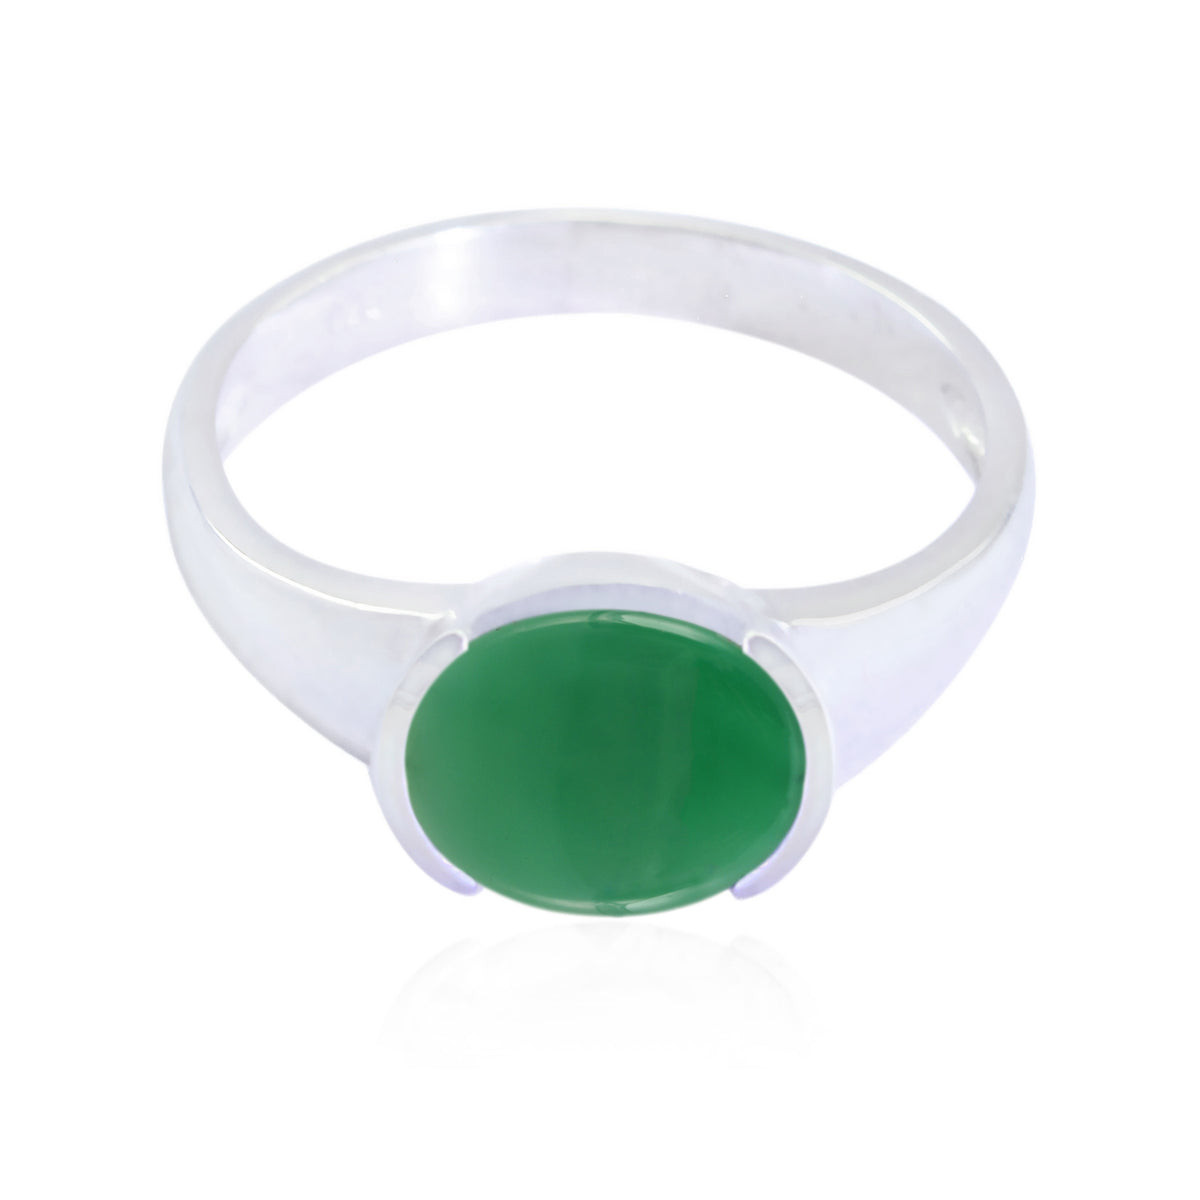 Riyo Superb Gemstone Green Onyx Sterling Silver Ring Jewelry Brands